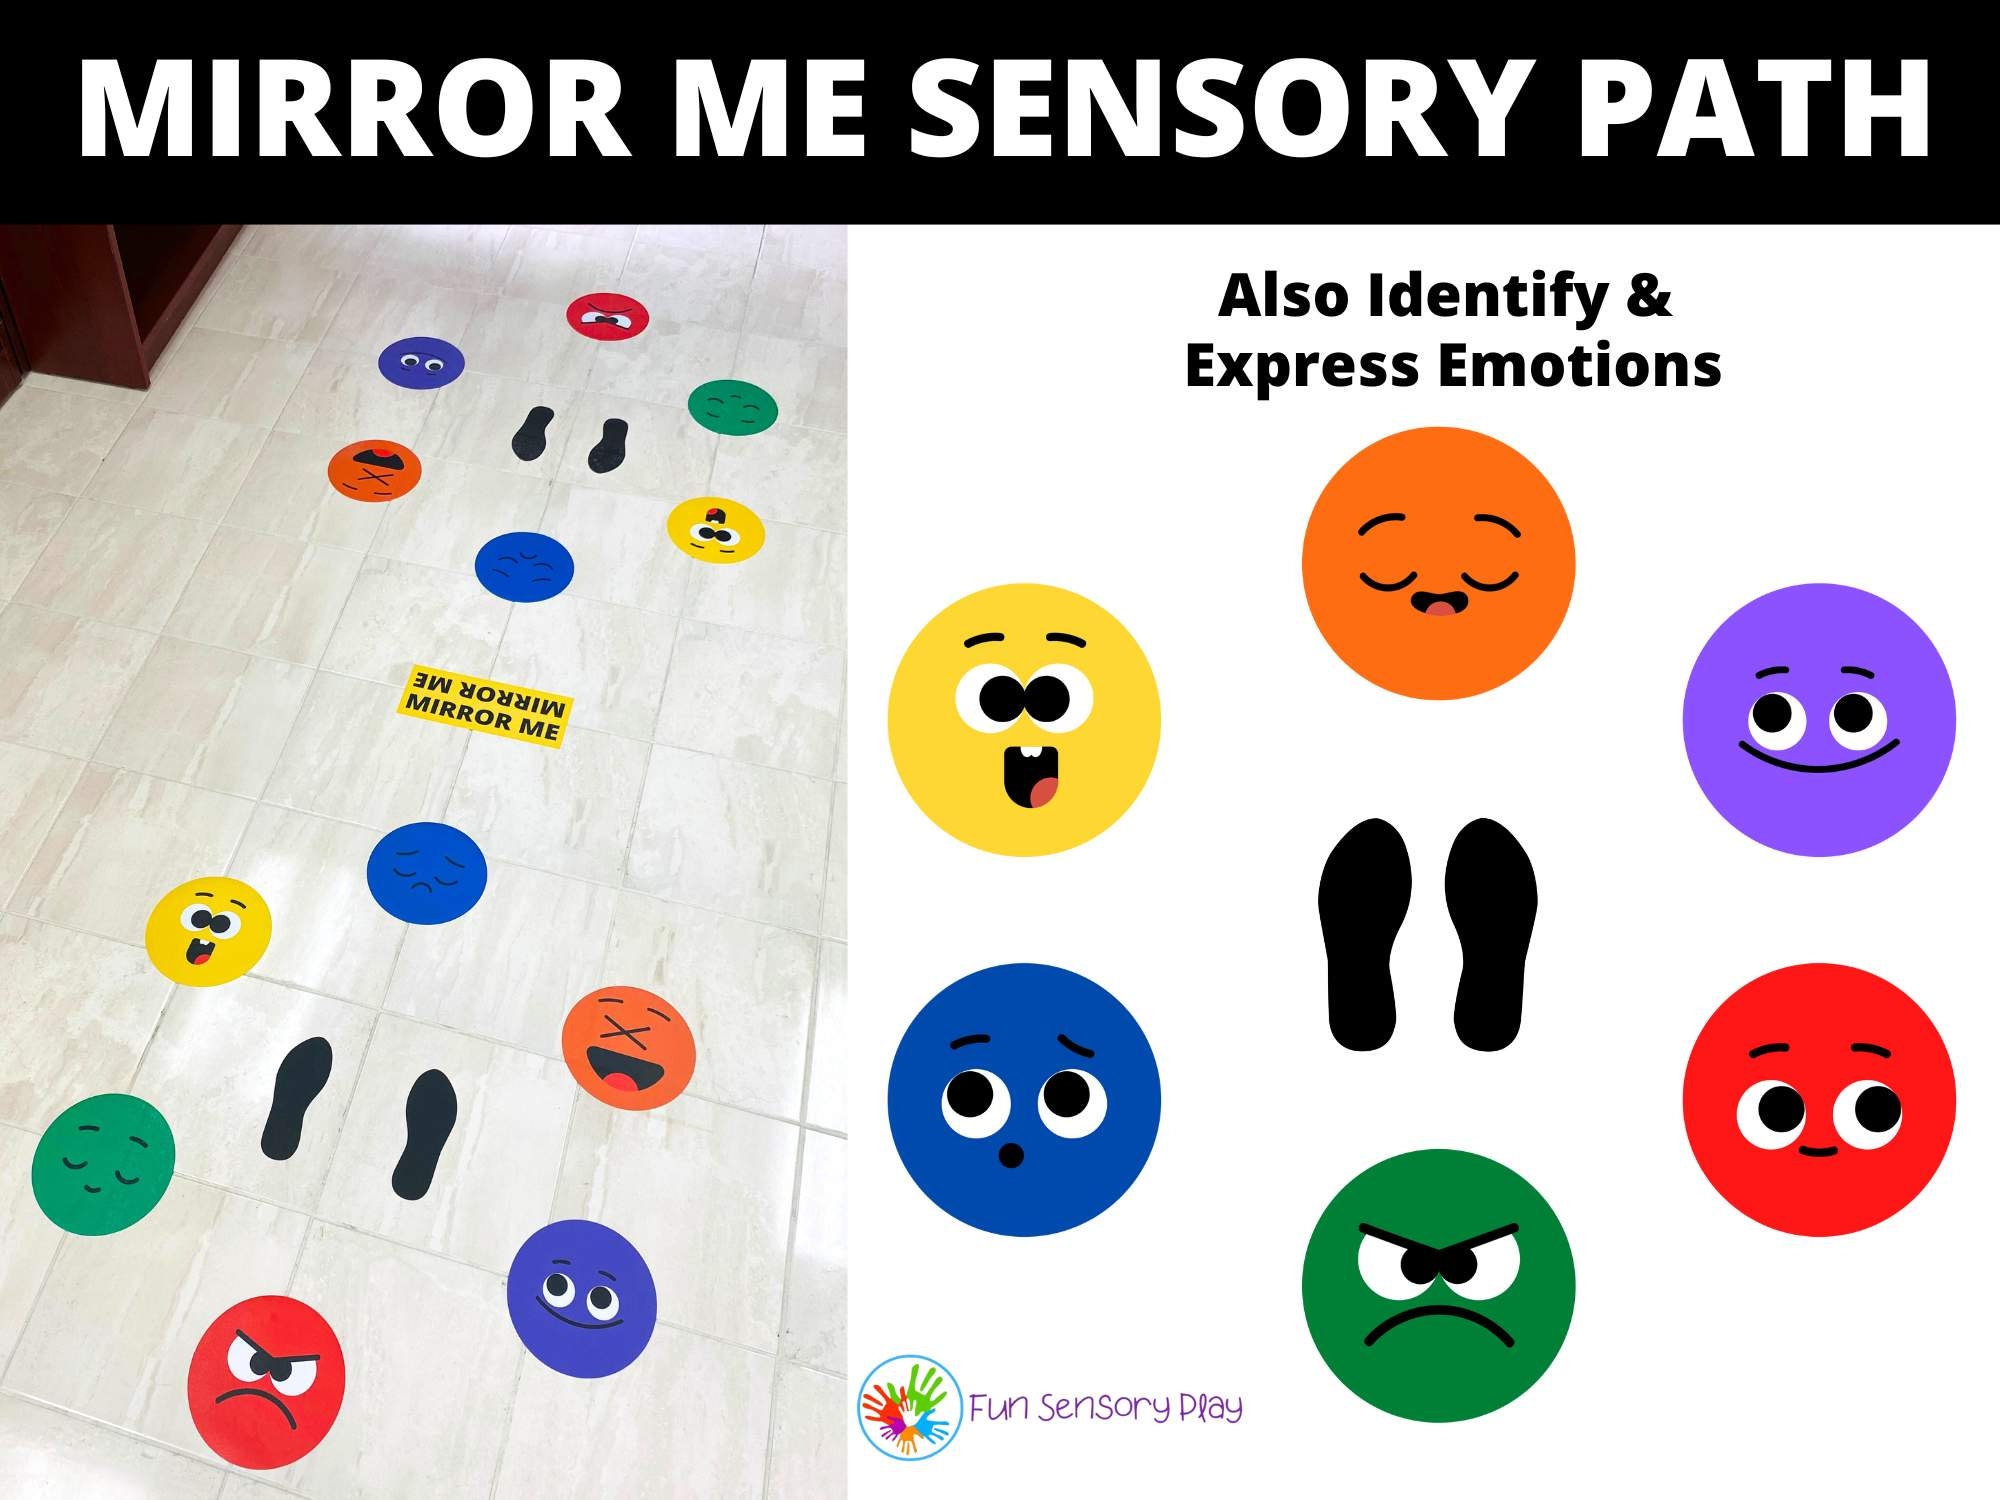 Sensory Path Floor Decal Stickers Mirror Me, Sensory Pathway